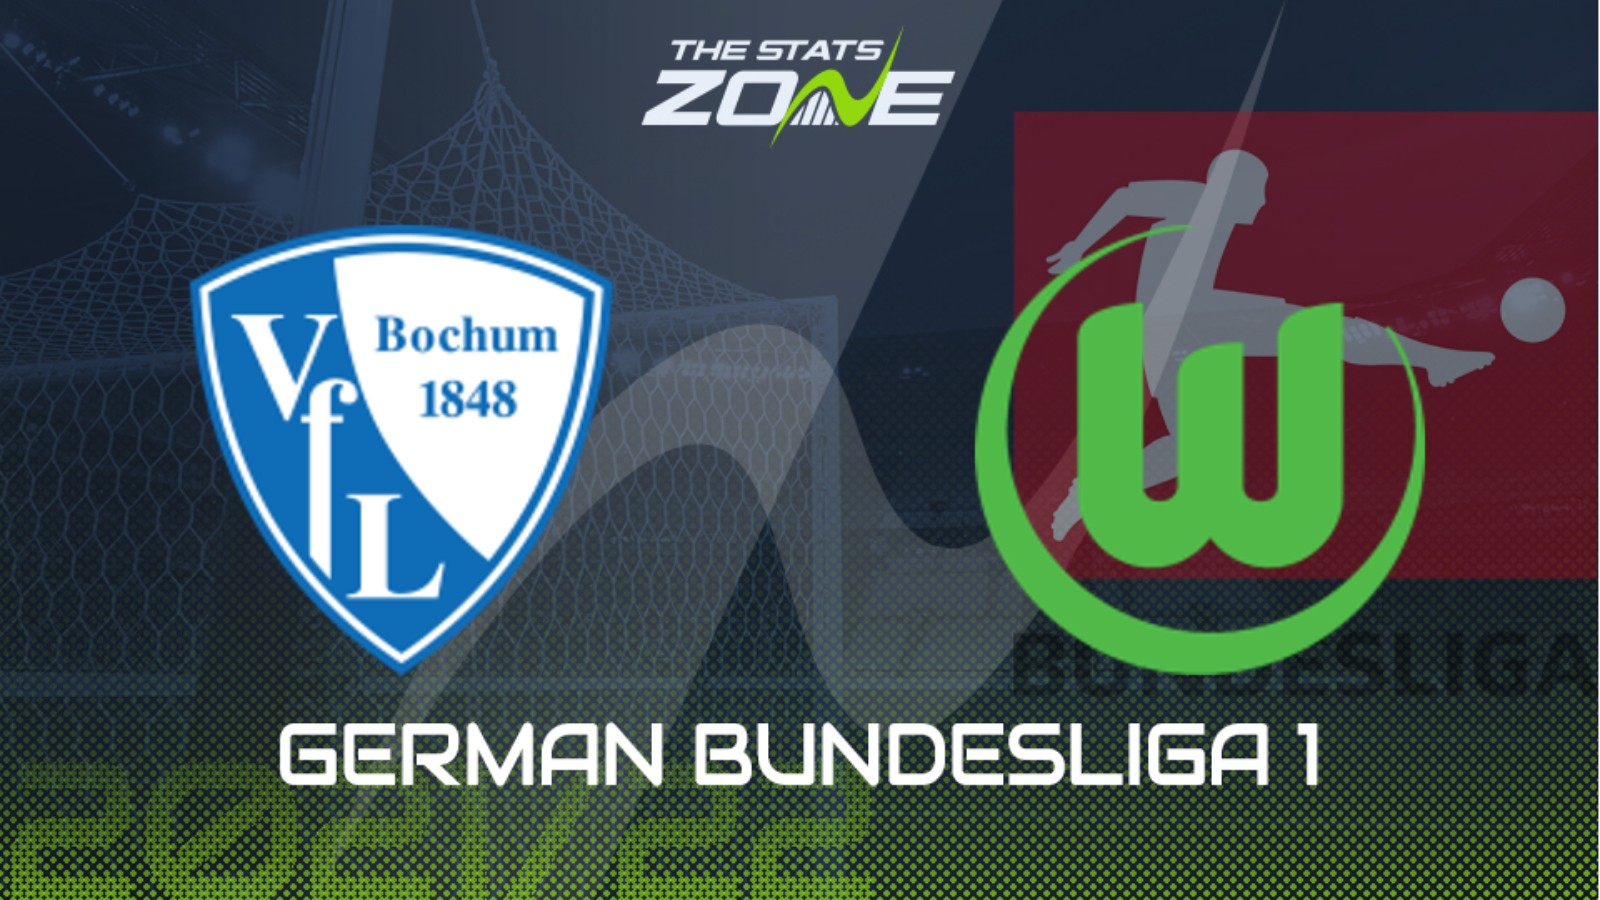 Bochum vs Wolfsburg 1 Soi kèo tài xỉu Bochum vs Wolfsburg 23h30 ngày 09/01/2022 - Bundesliga 